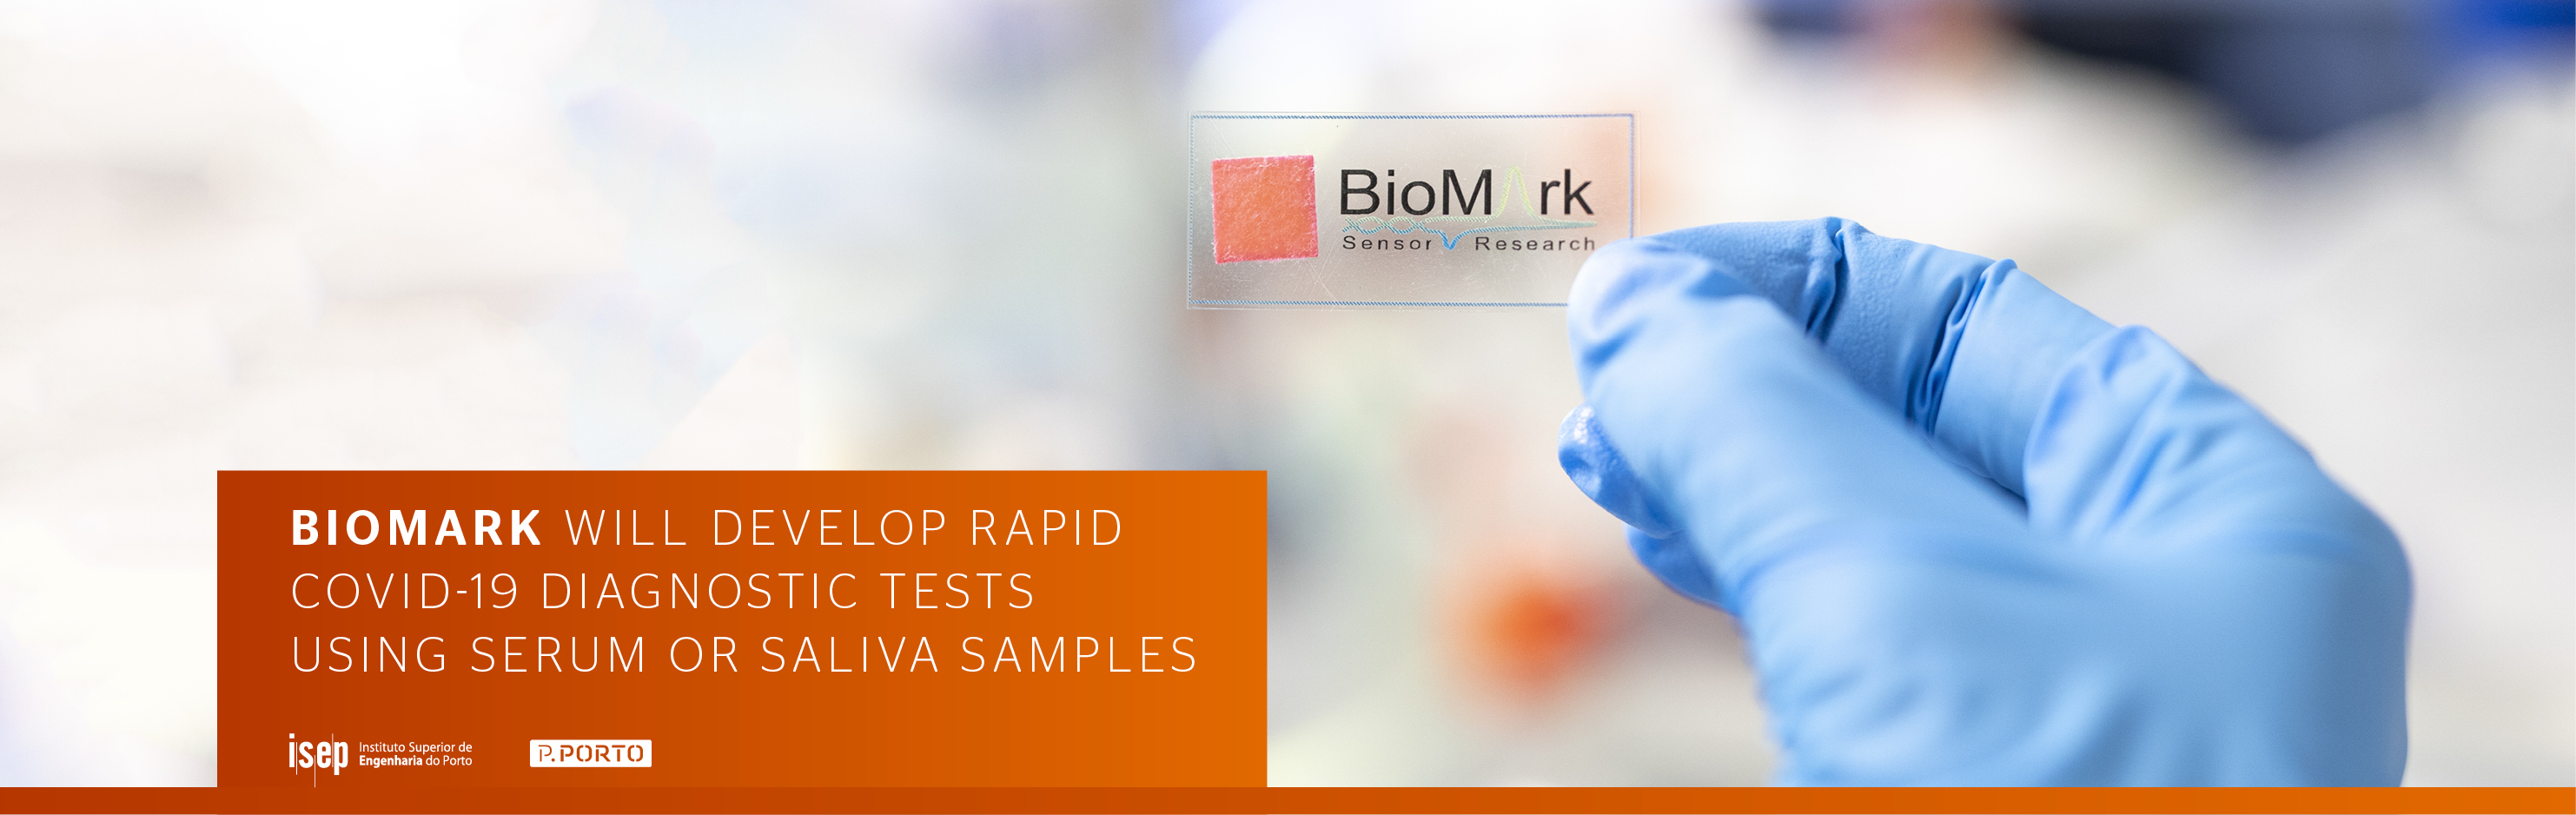 BioMark will develop rapid Covid-19 diagnostic tests using serum or saliva samples